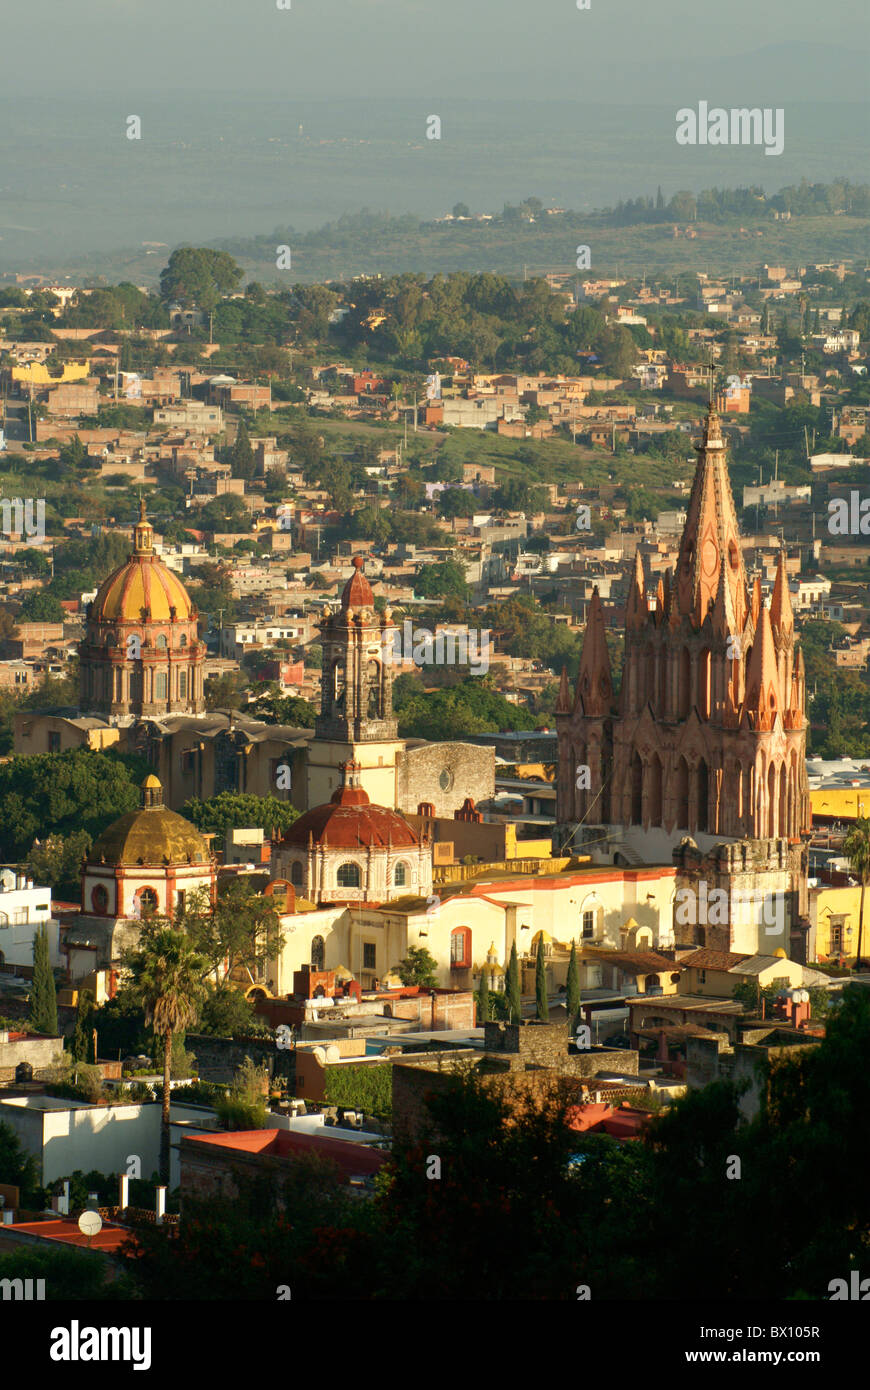 Das historische Zentrum von San Miguel de Allende, Guanajuato, Mexiko. Stockfoto